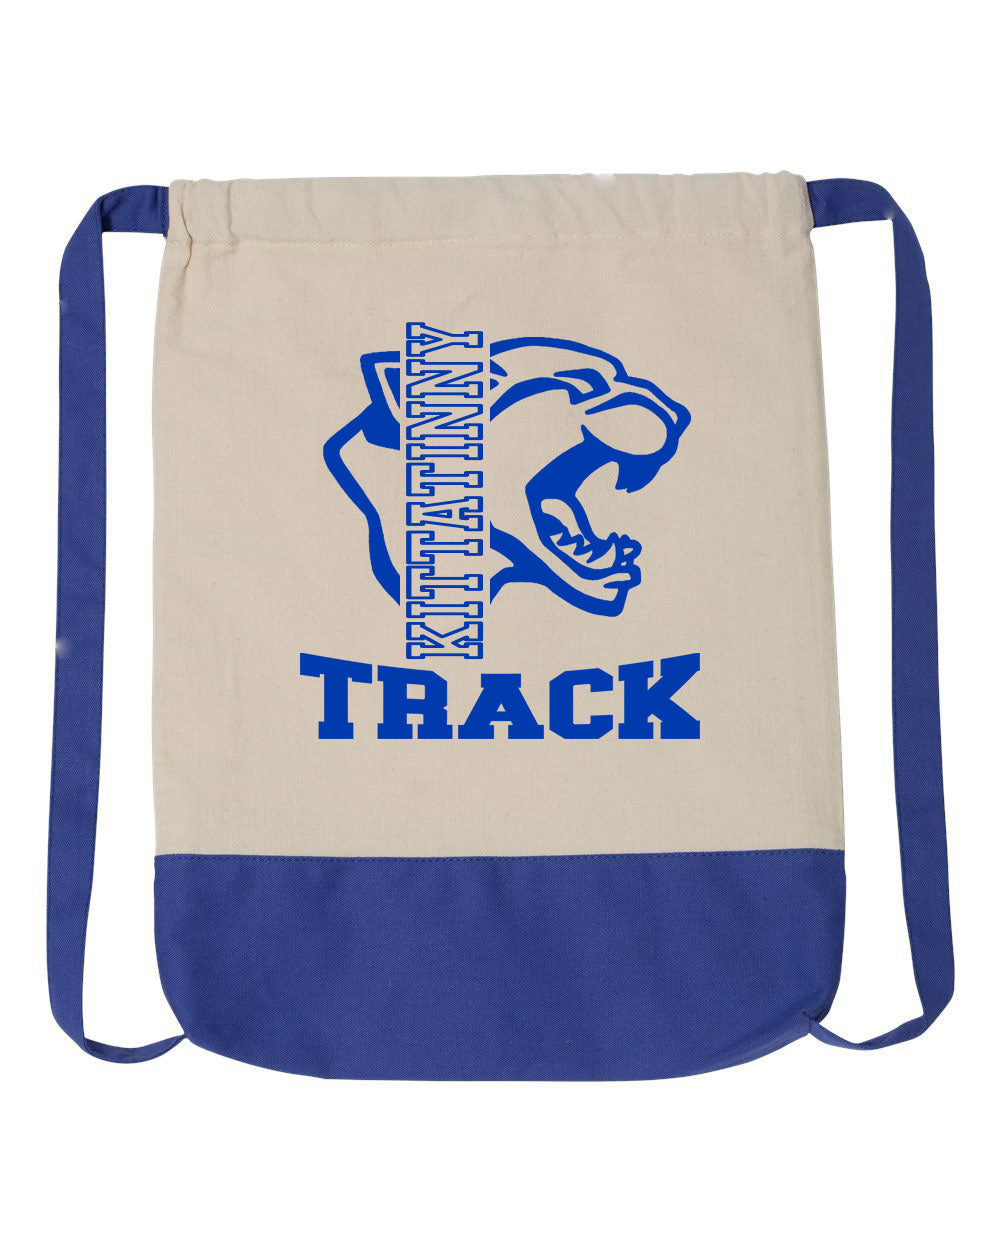 Kittatinny Track Drawstring Bag Design 8